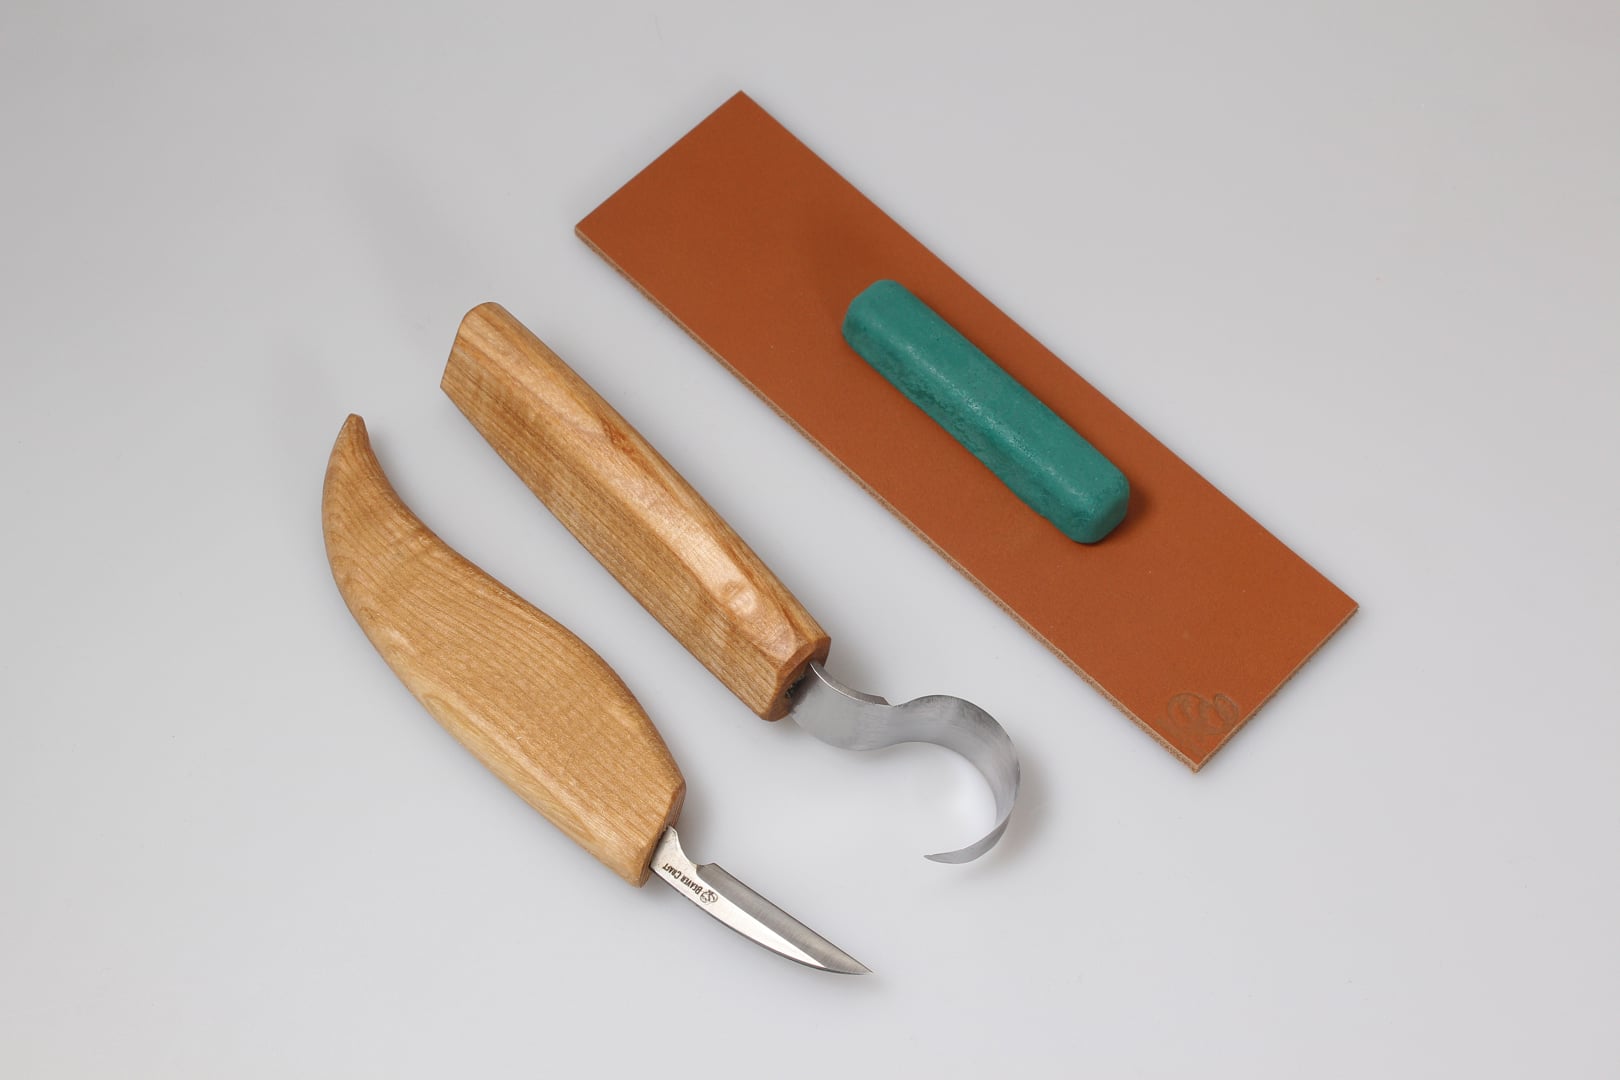 FC Best Spoon Carving Knife Set 2.0 S2 – Focuser Carving